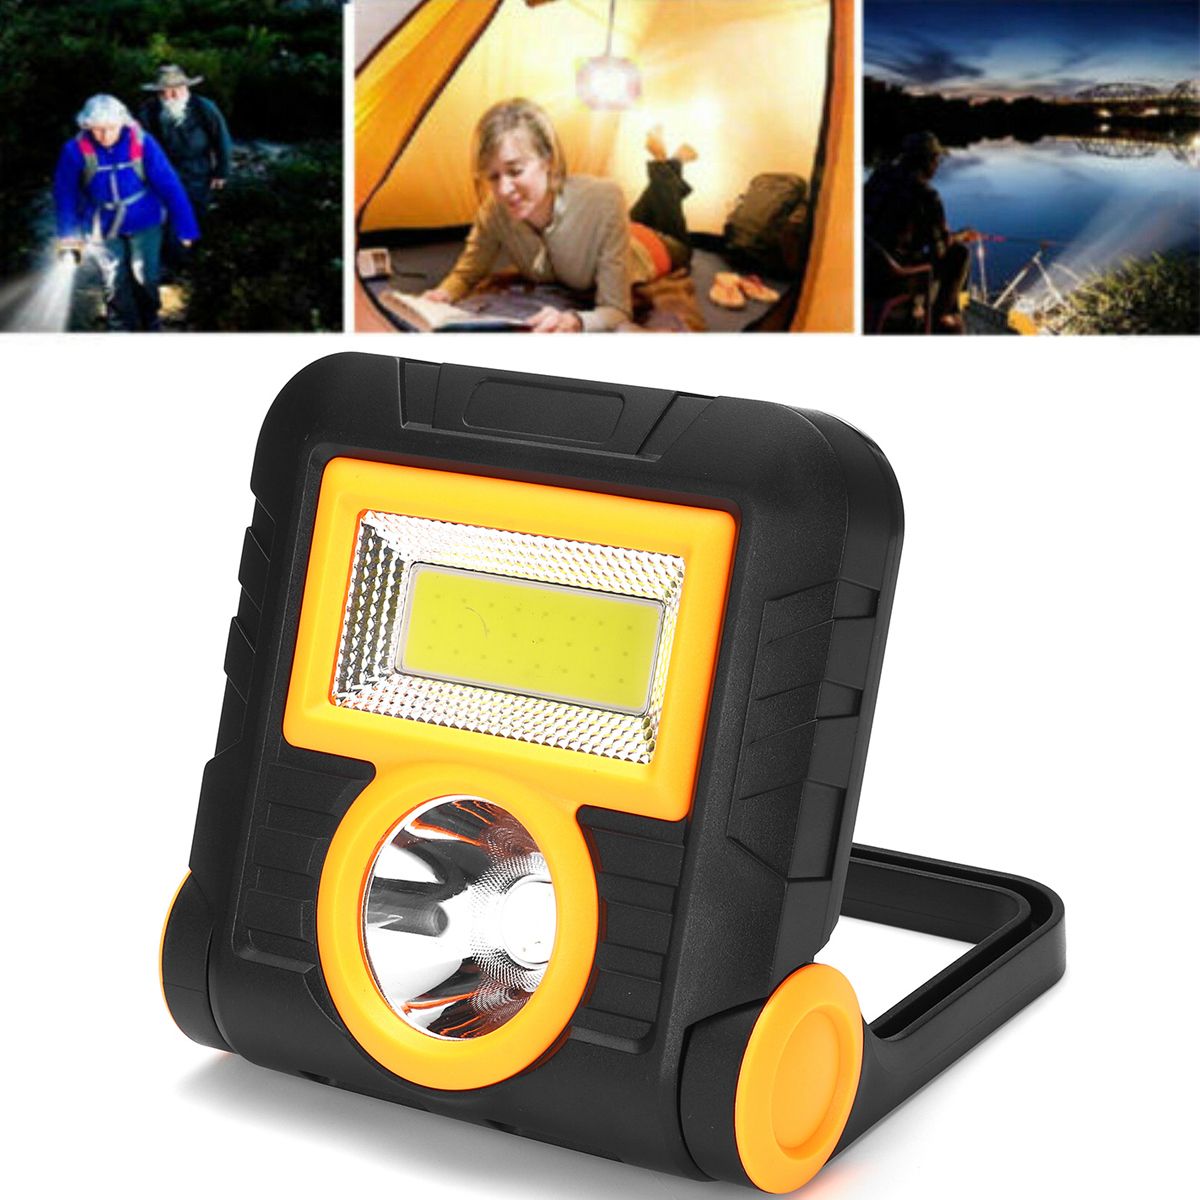 COB-Emergency-Work-Light-Searchlight-Flood-Lamp-Outdoor-Camping-Lighting-T6-1724434